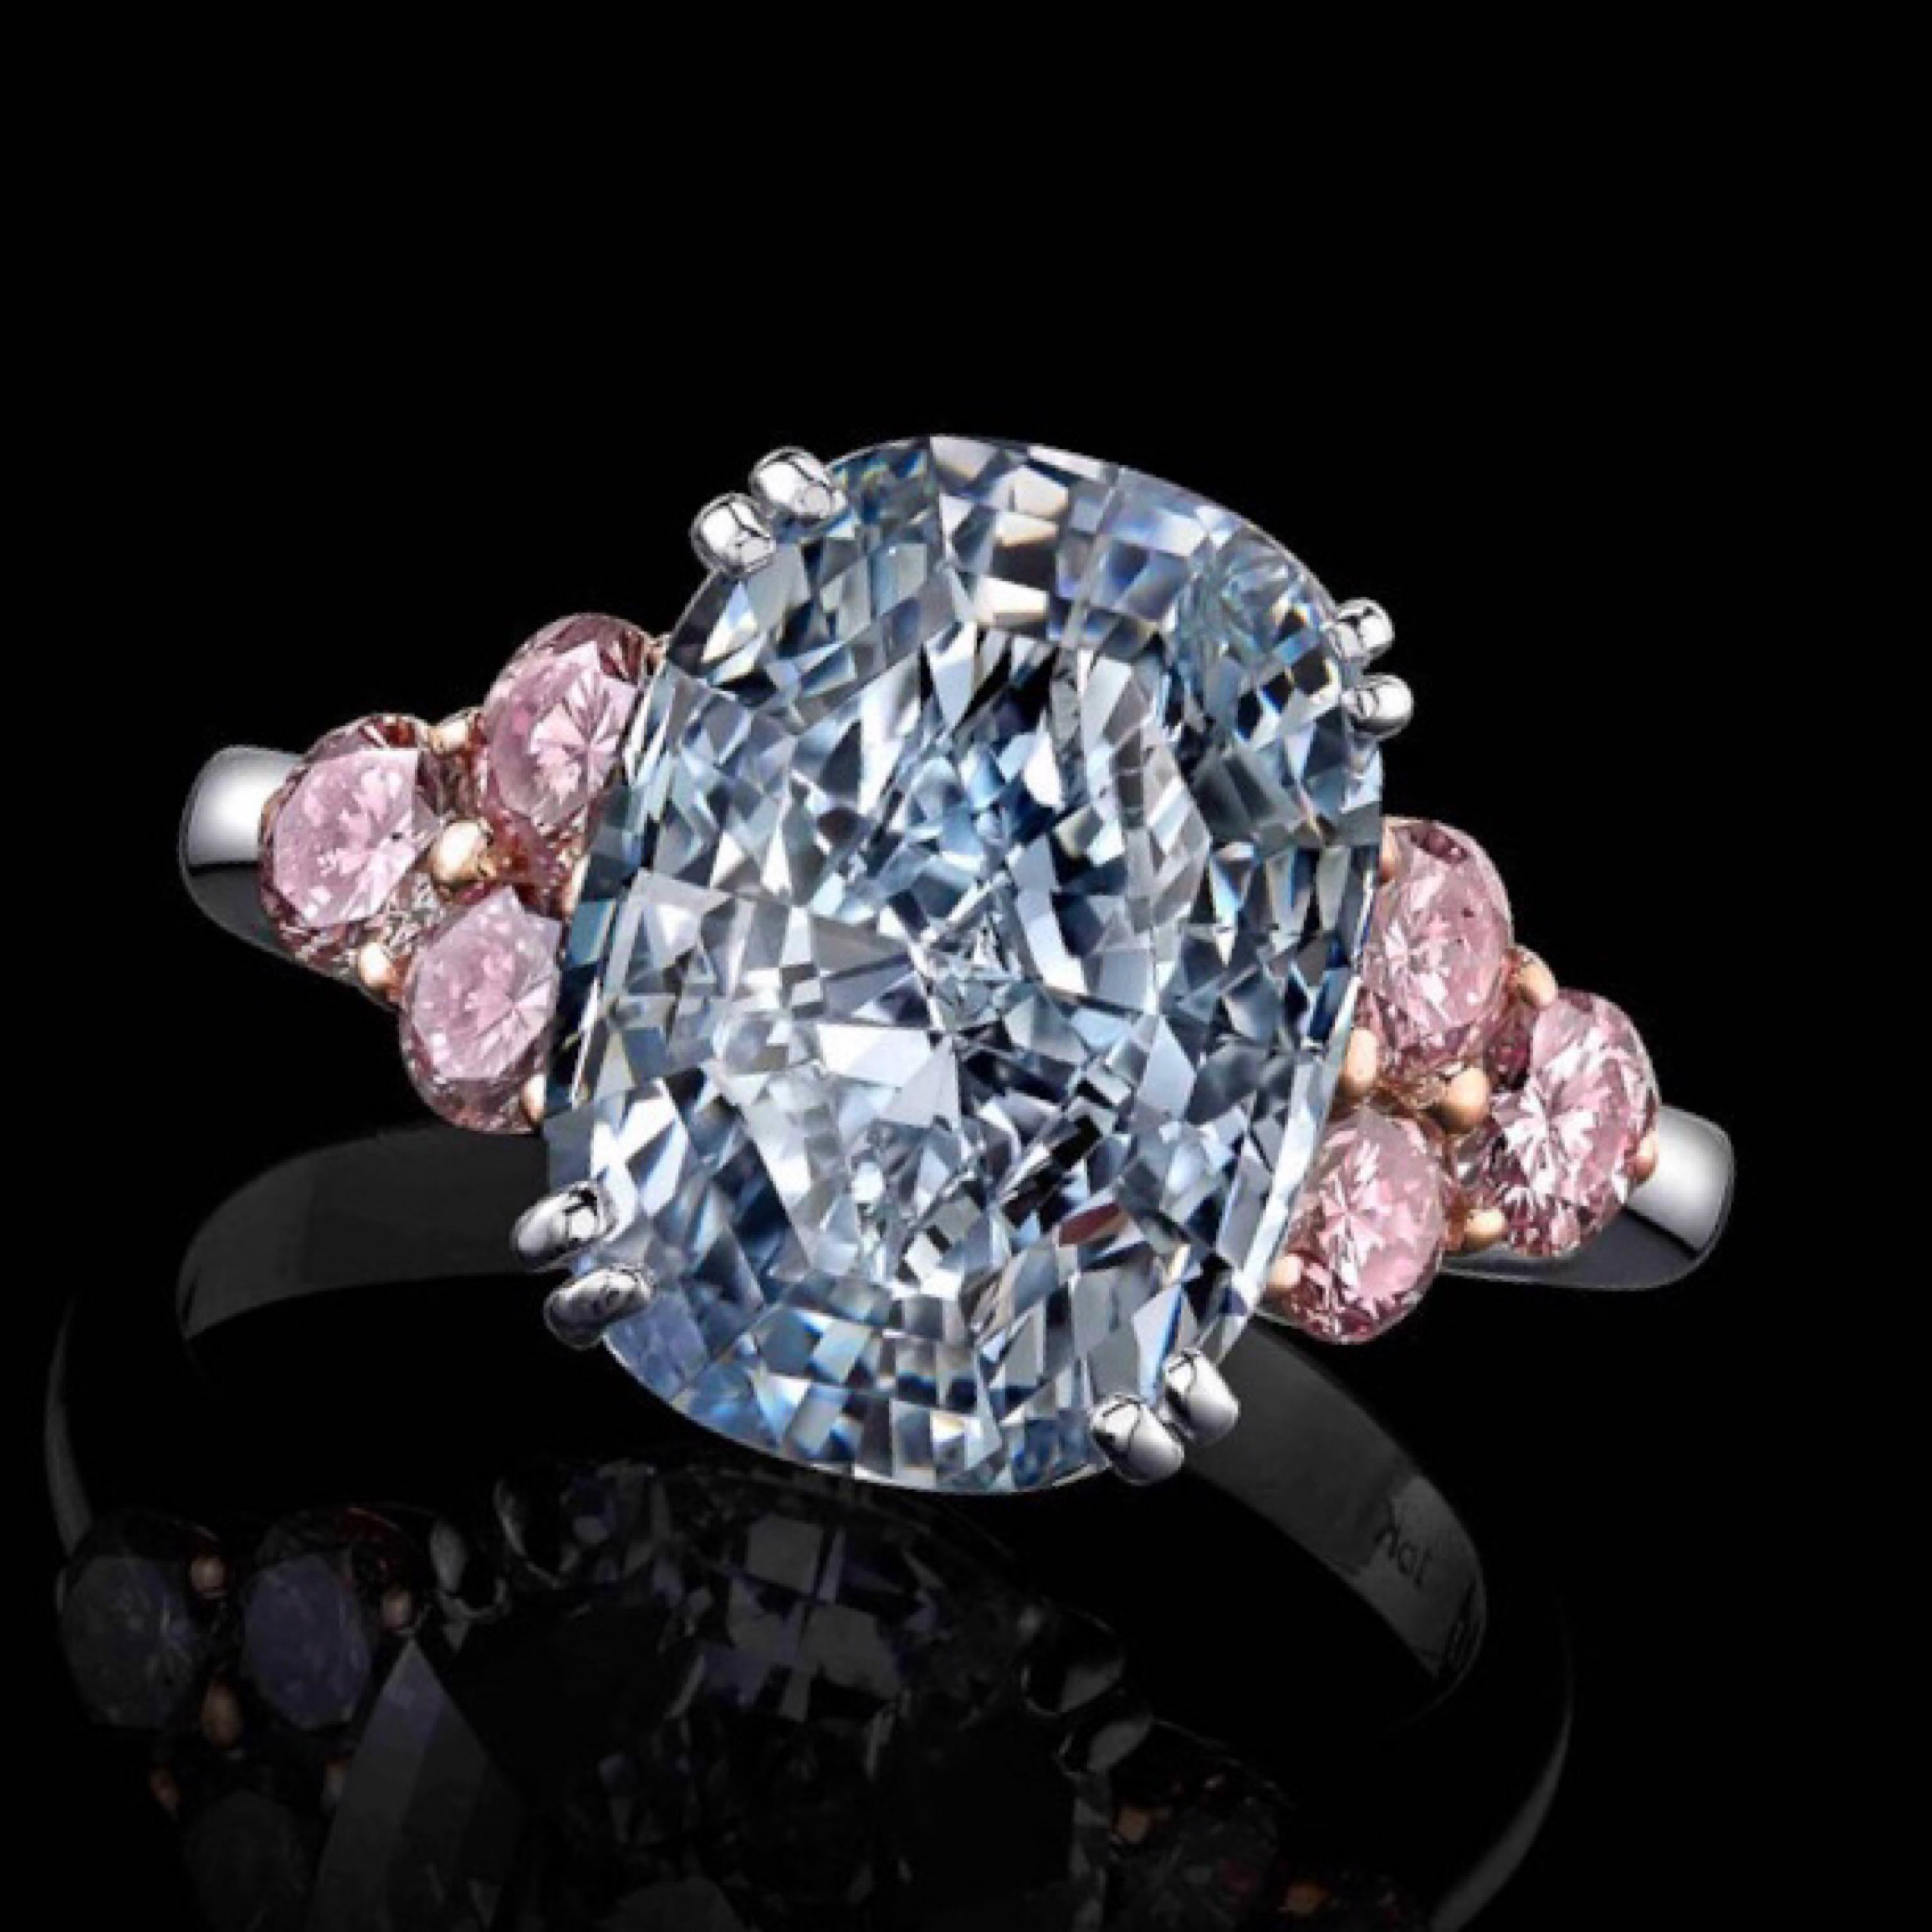 600 carat diamond